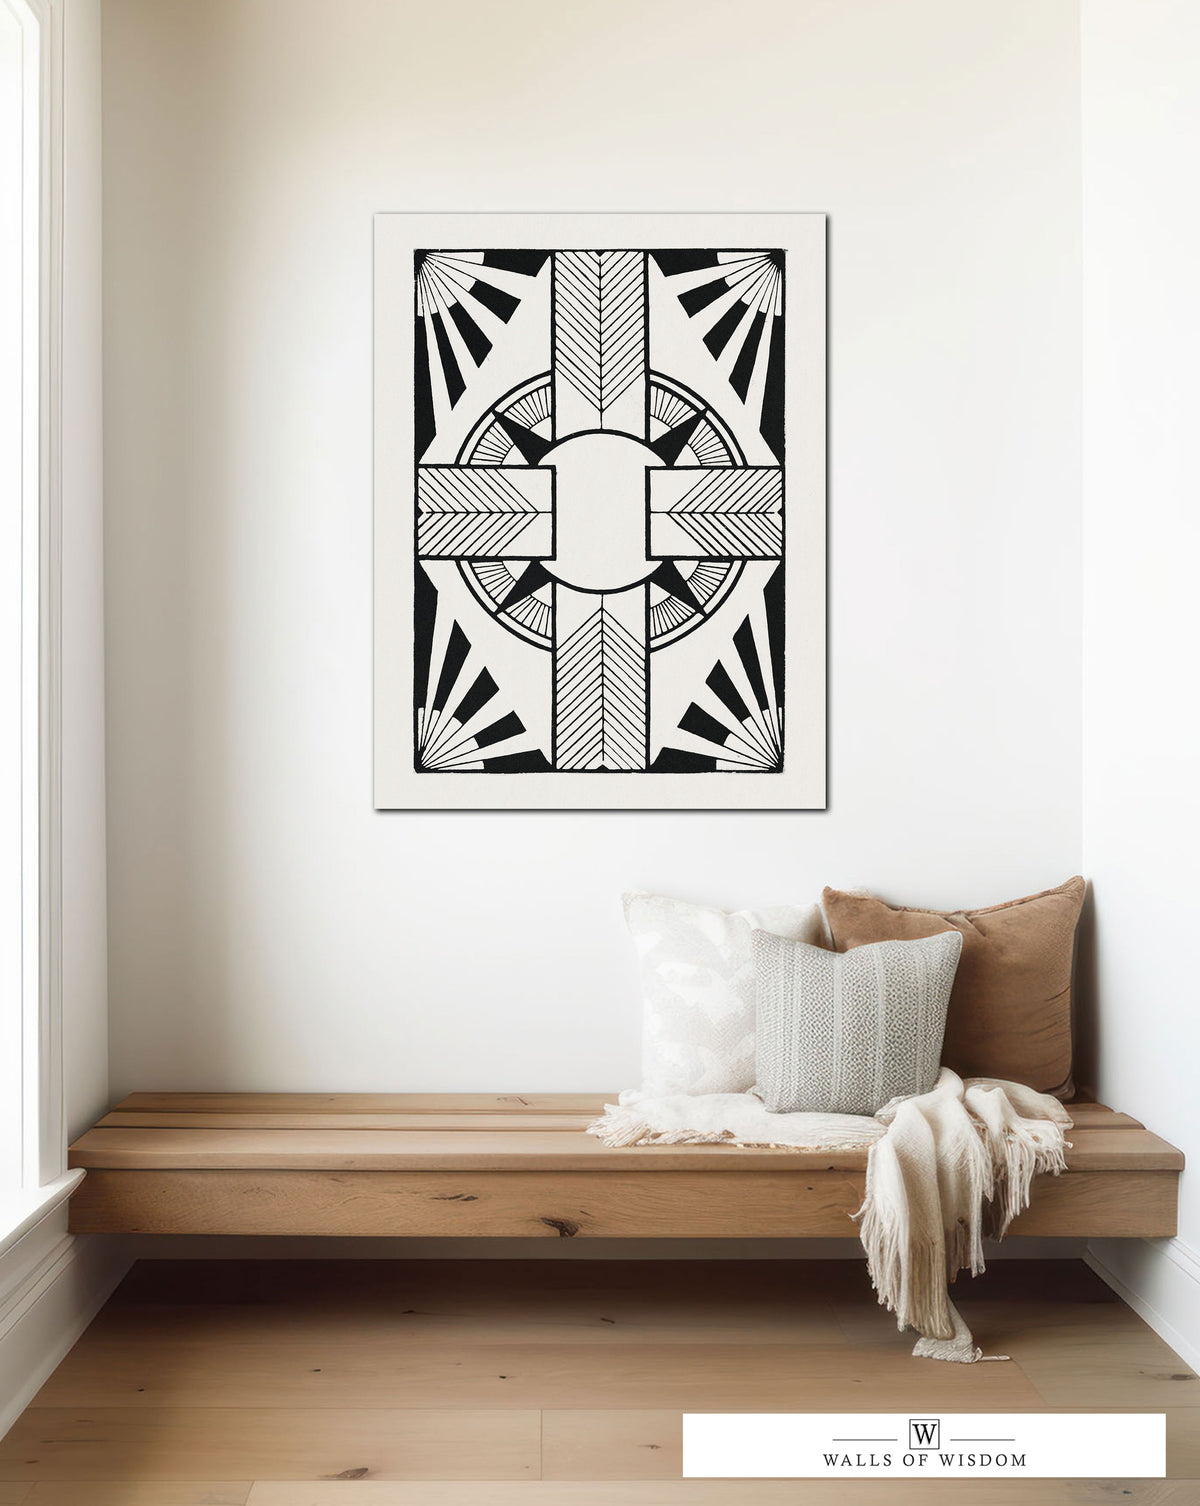 Intricate Geometric Patterns in Canvas Print